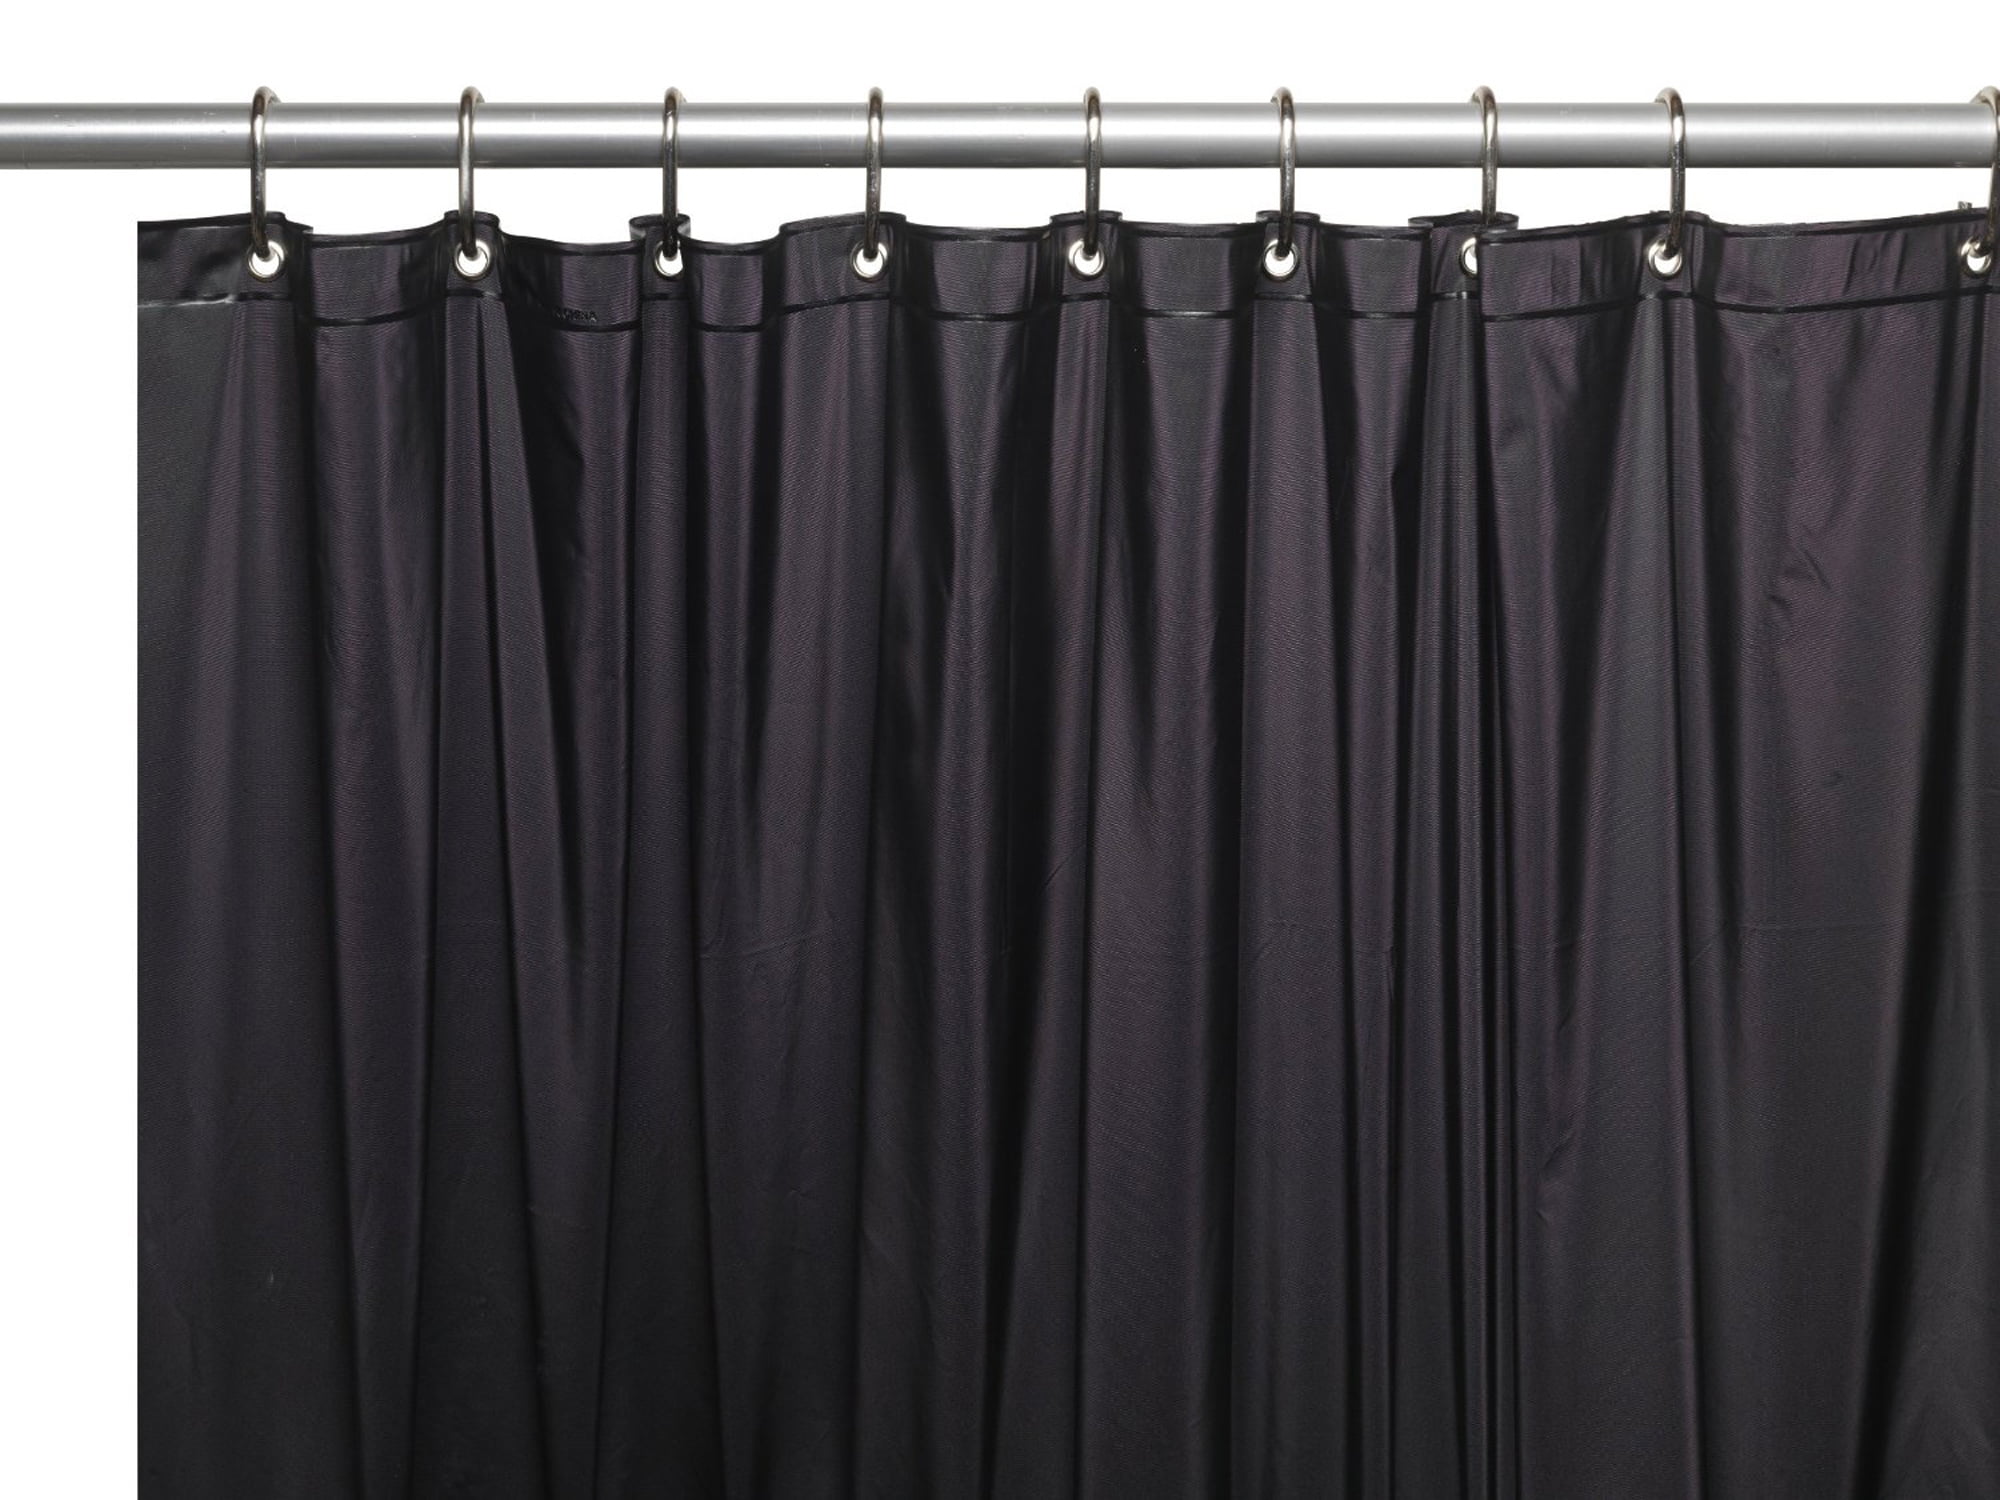 Shower Curtain Liner Metal Grommets Magnets Standard Size 70" x 72" 